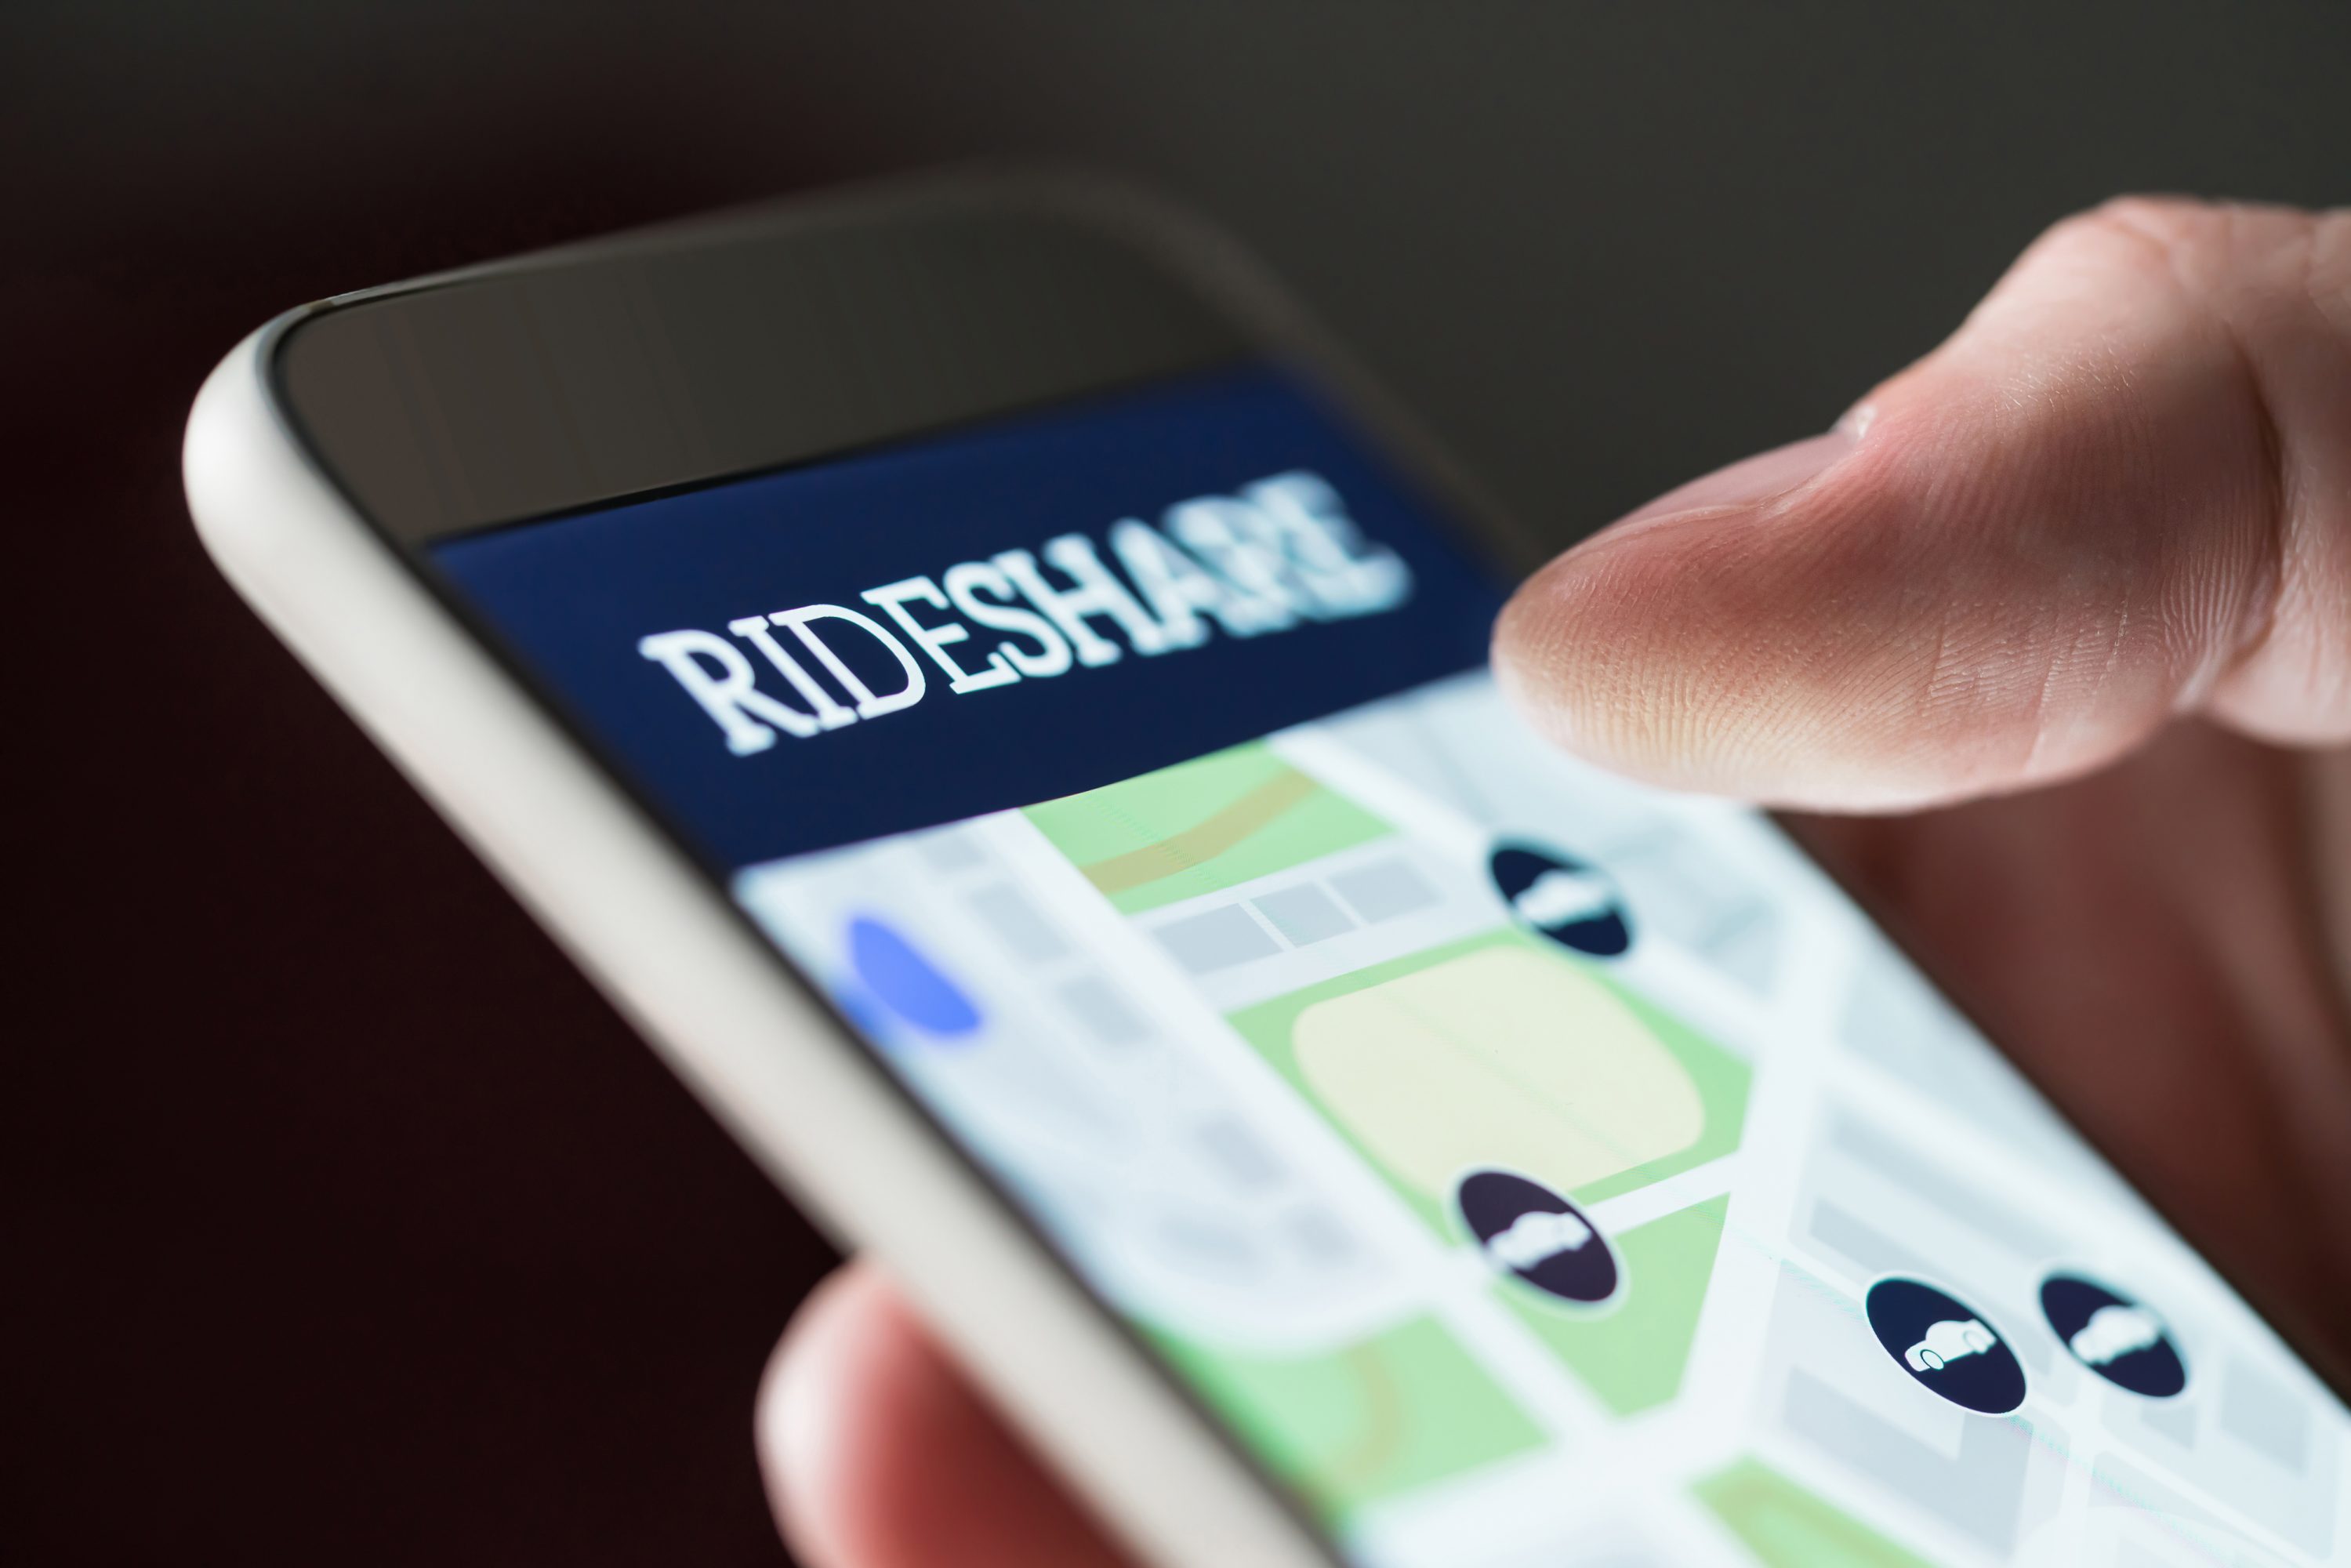 Ride share app in smartphone.